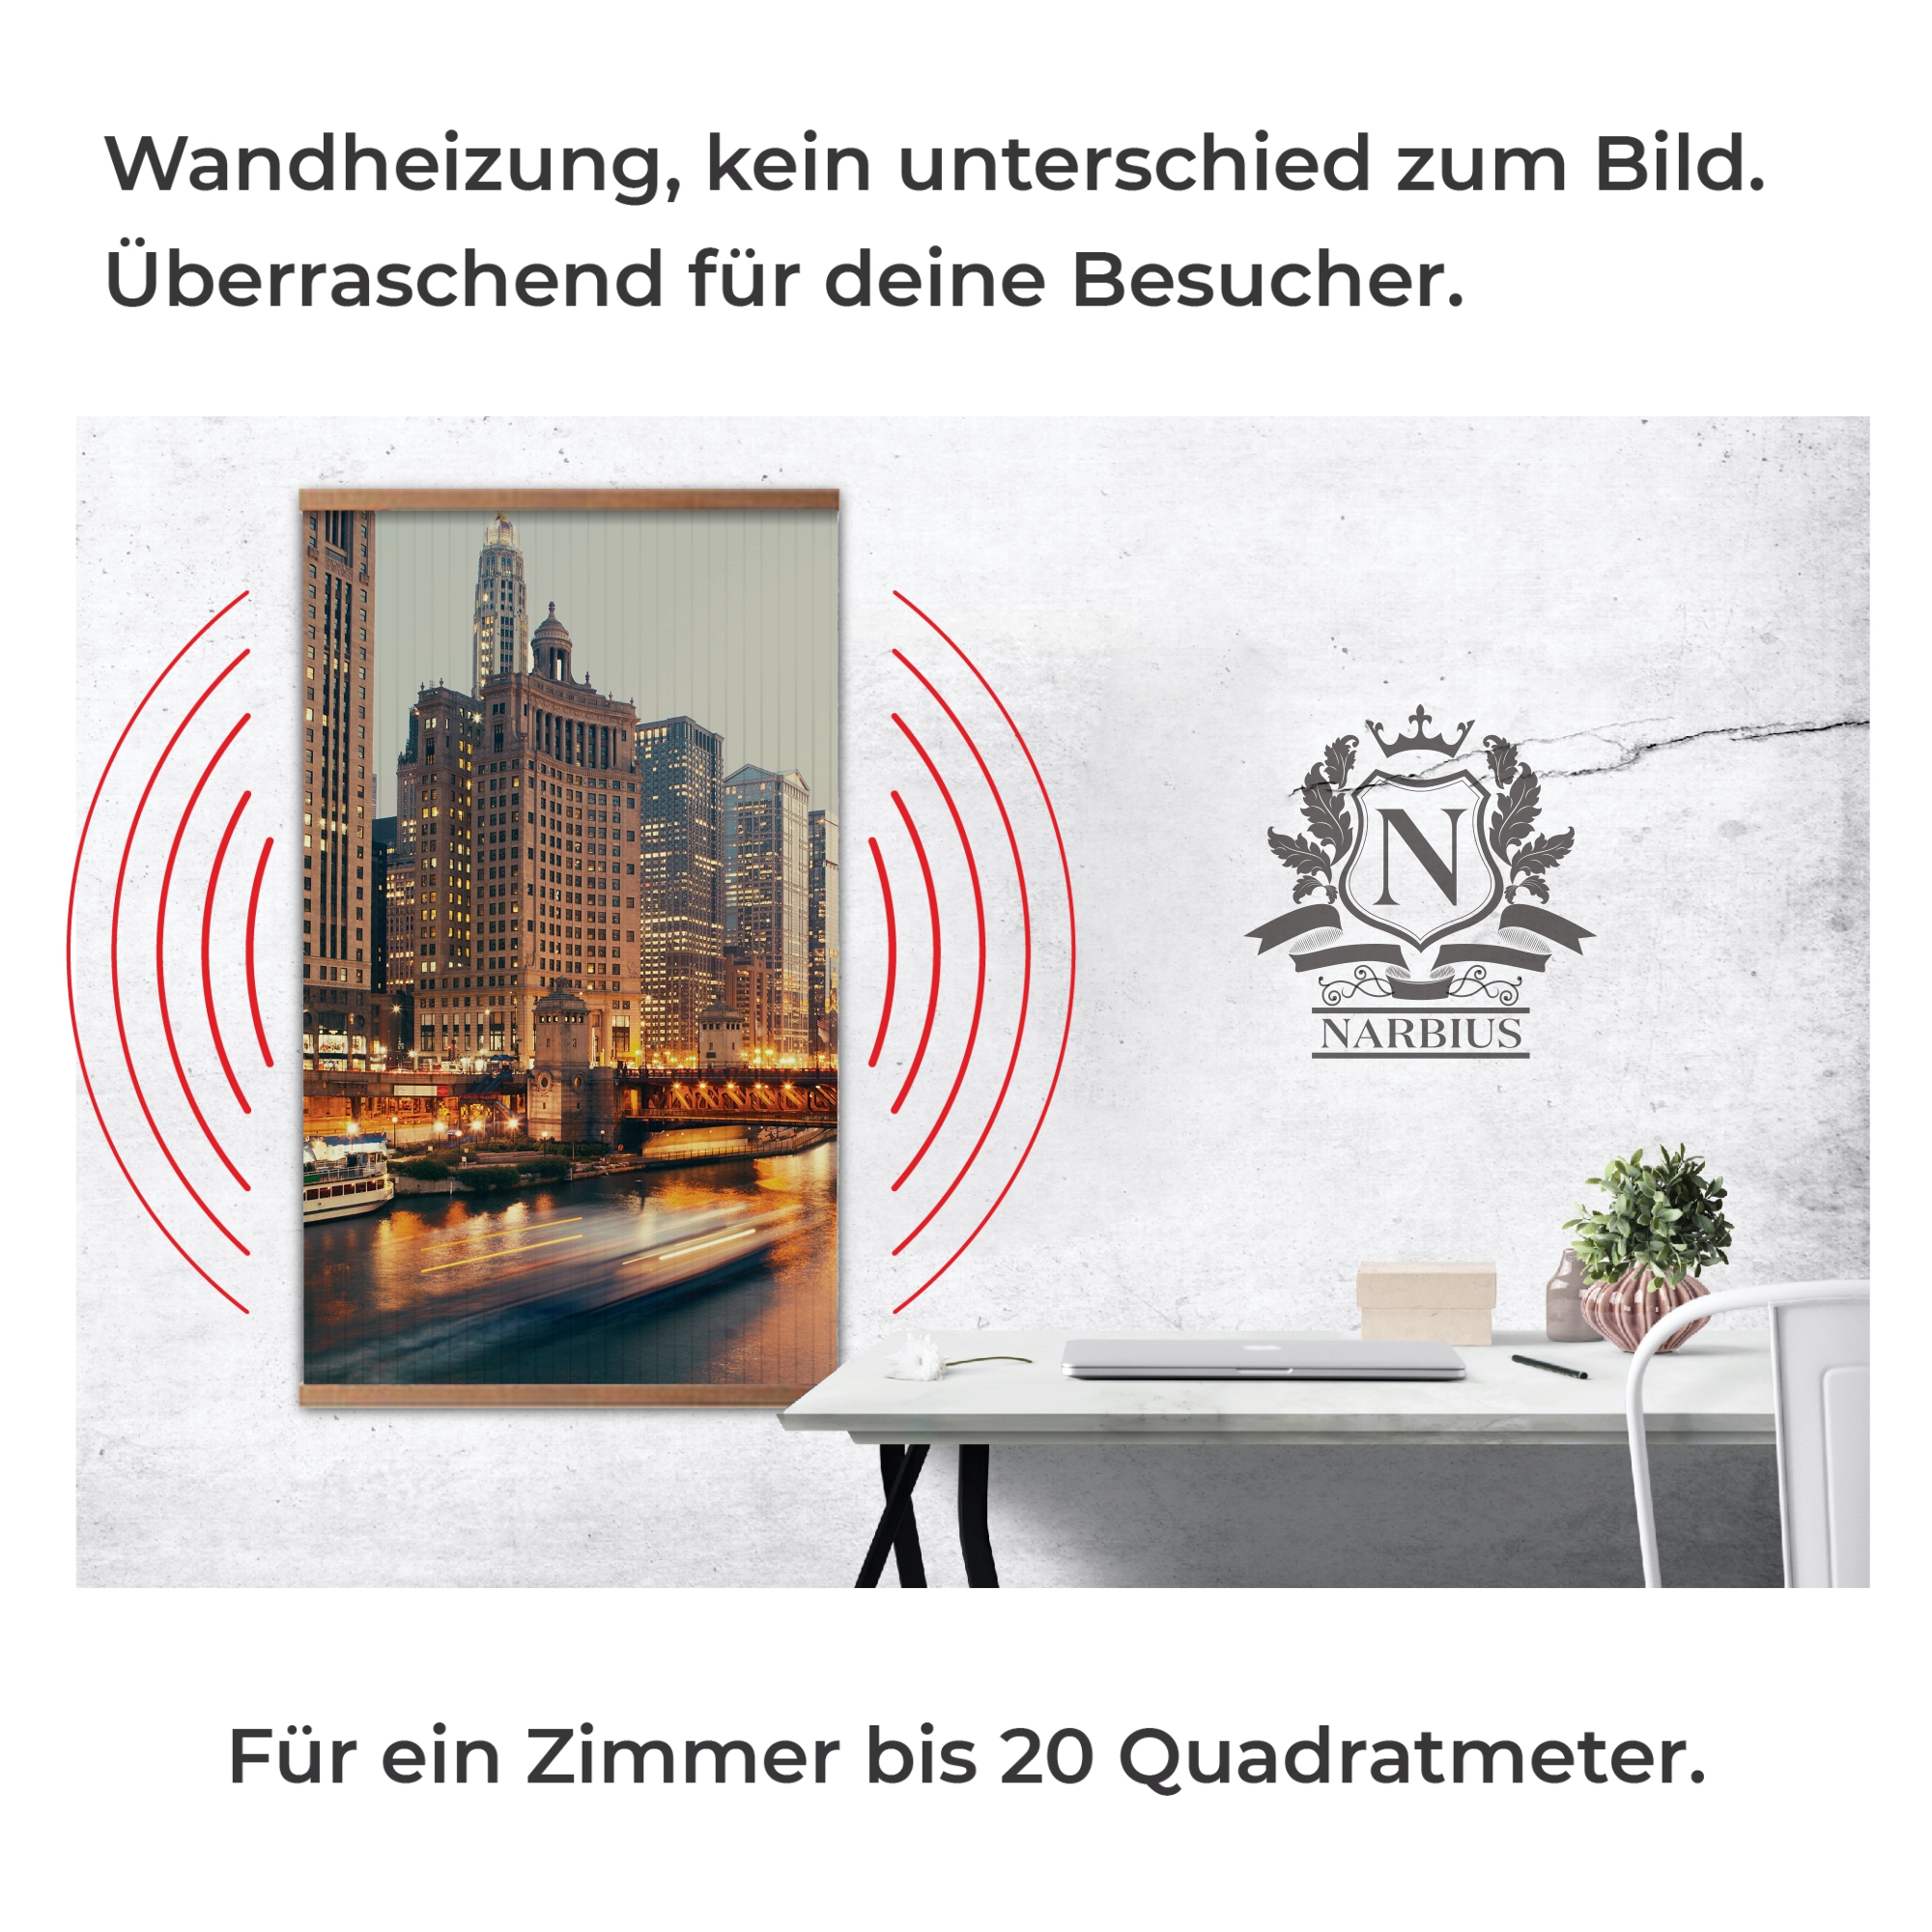 Infrarotheizung 500 Watt Bildheizung Heizbild Serie Home Kamin Infrarot Wandheizung Heizer Bild Nächtliche Stadt